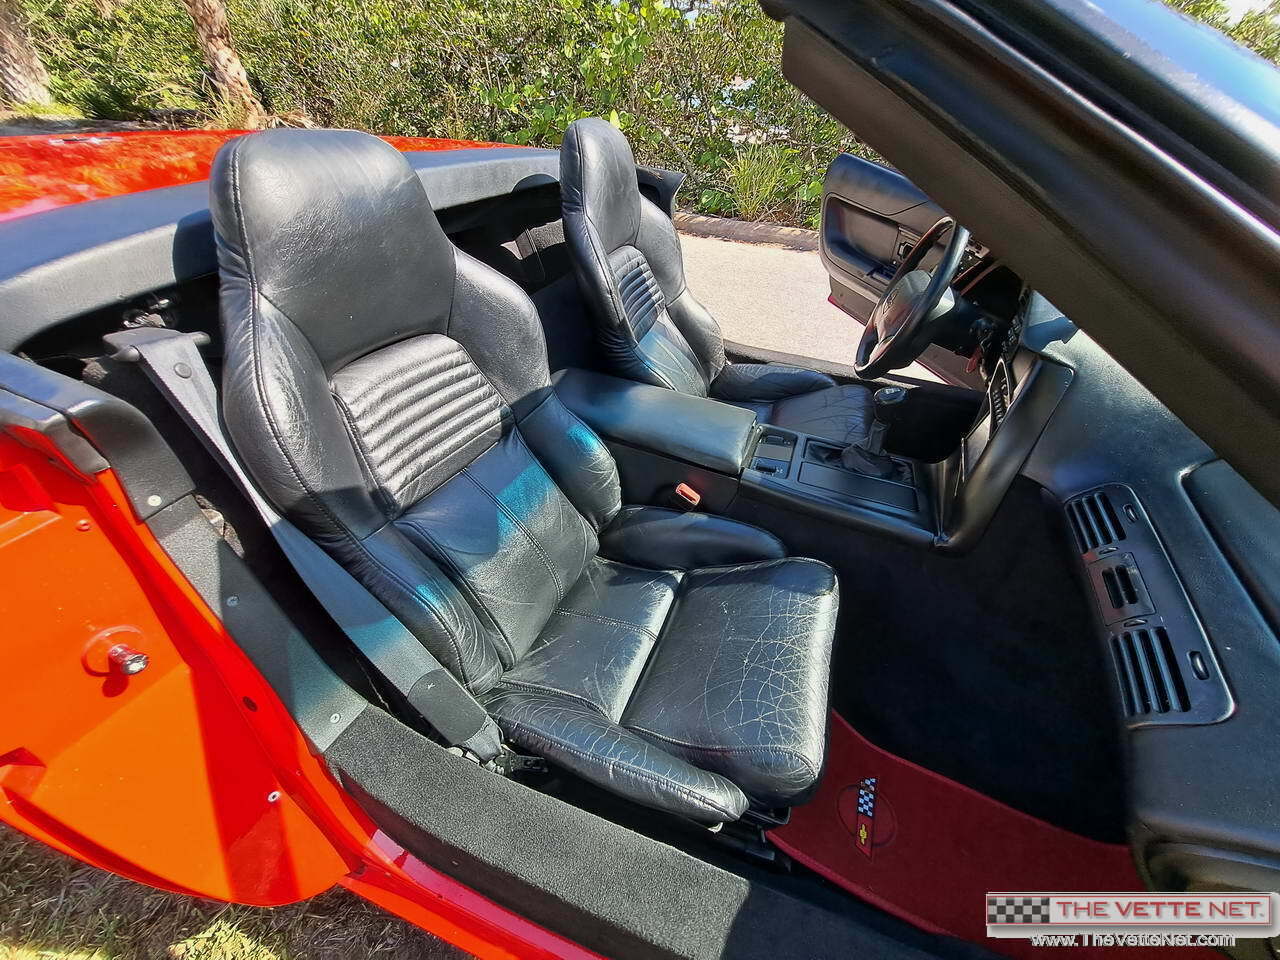 1995 Corvette Convertible Red